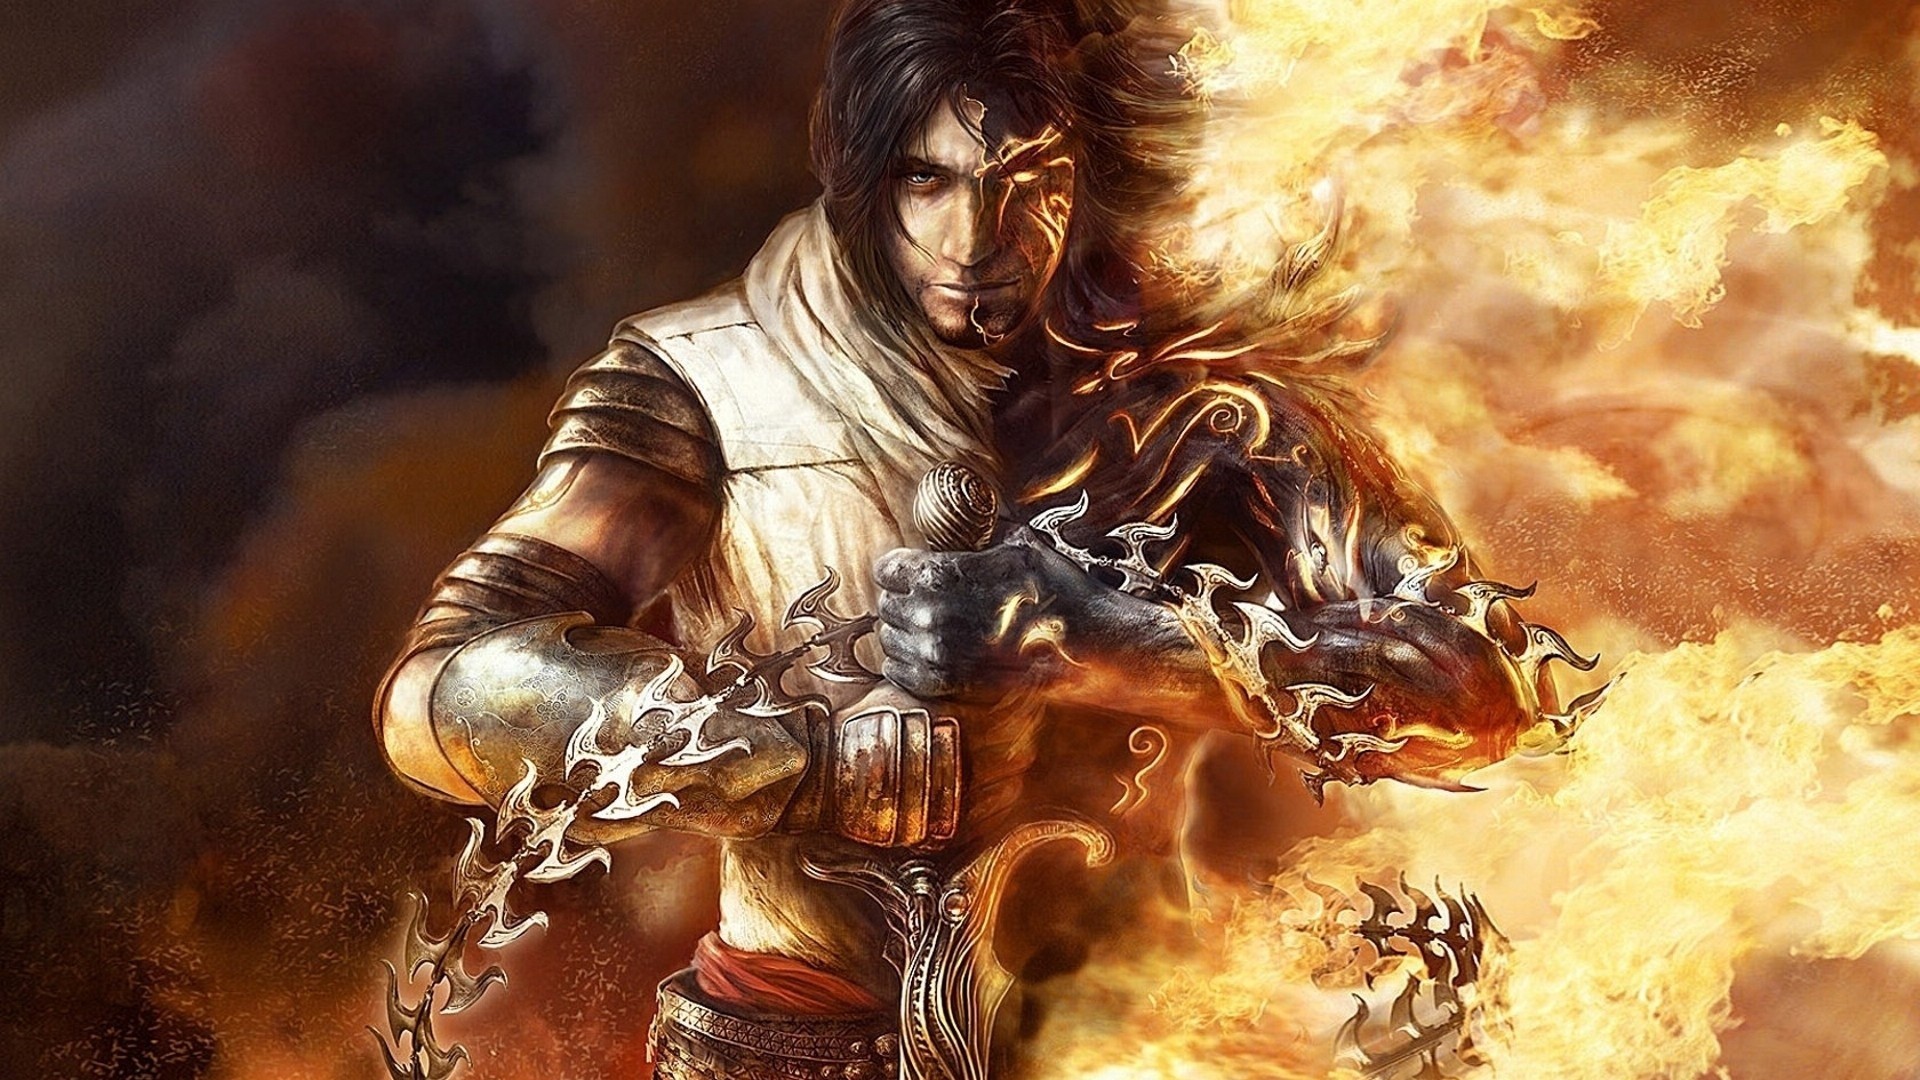 Fantasy Art Hero Men Sword Fire Armor Video Games Prince Of Persia The Two Thrones 1920x1080